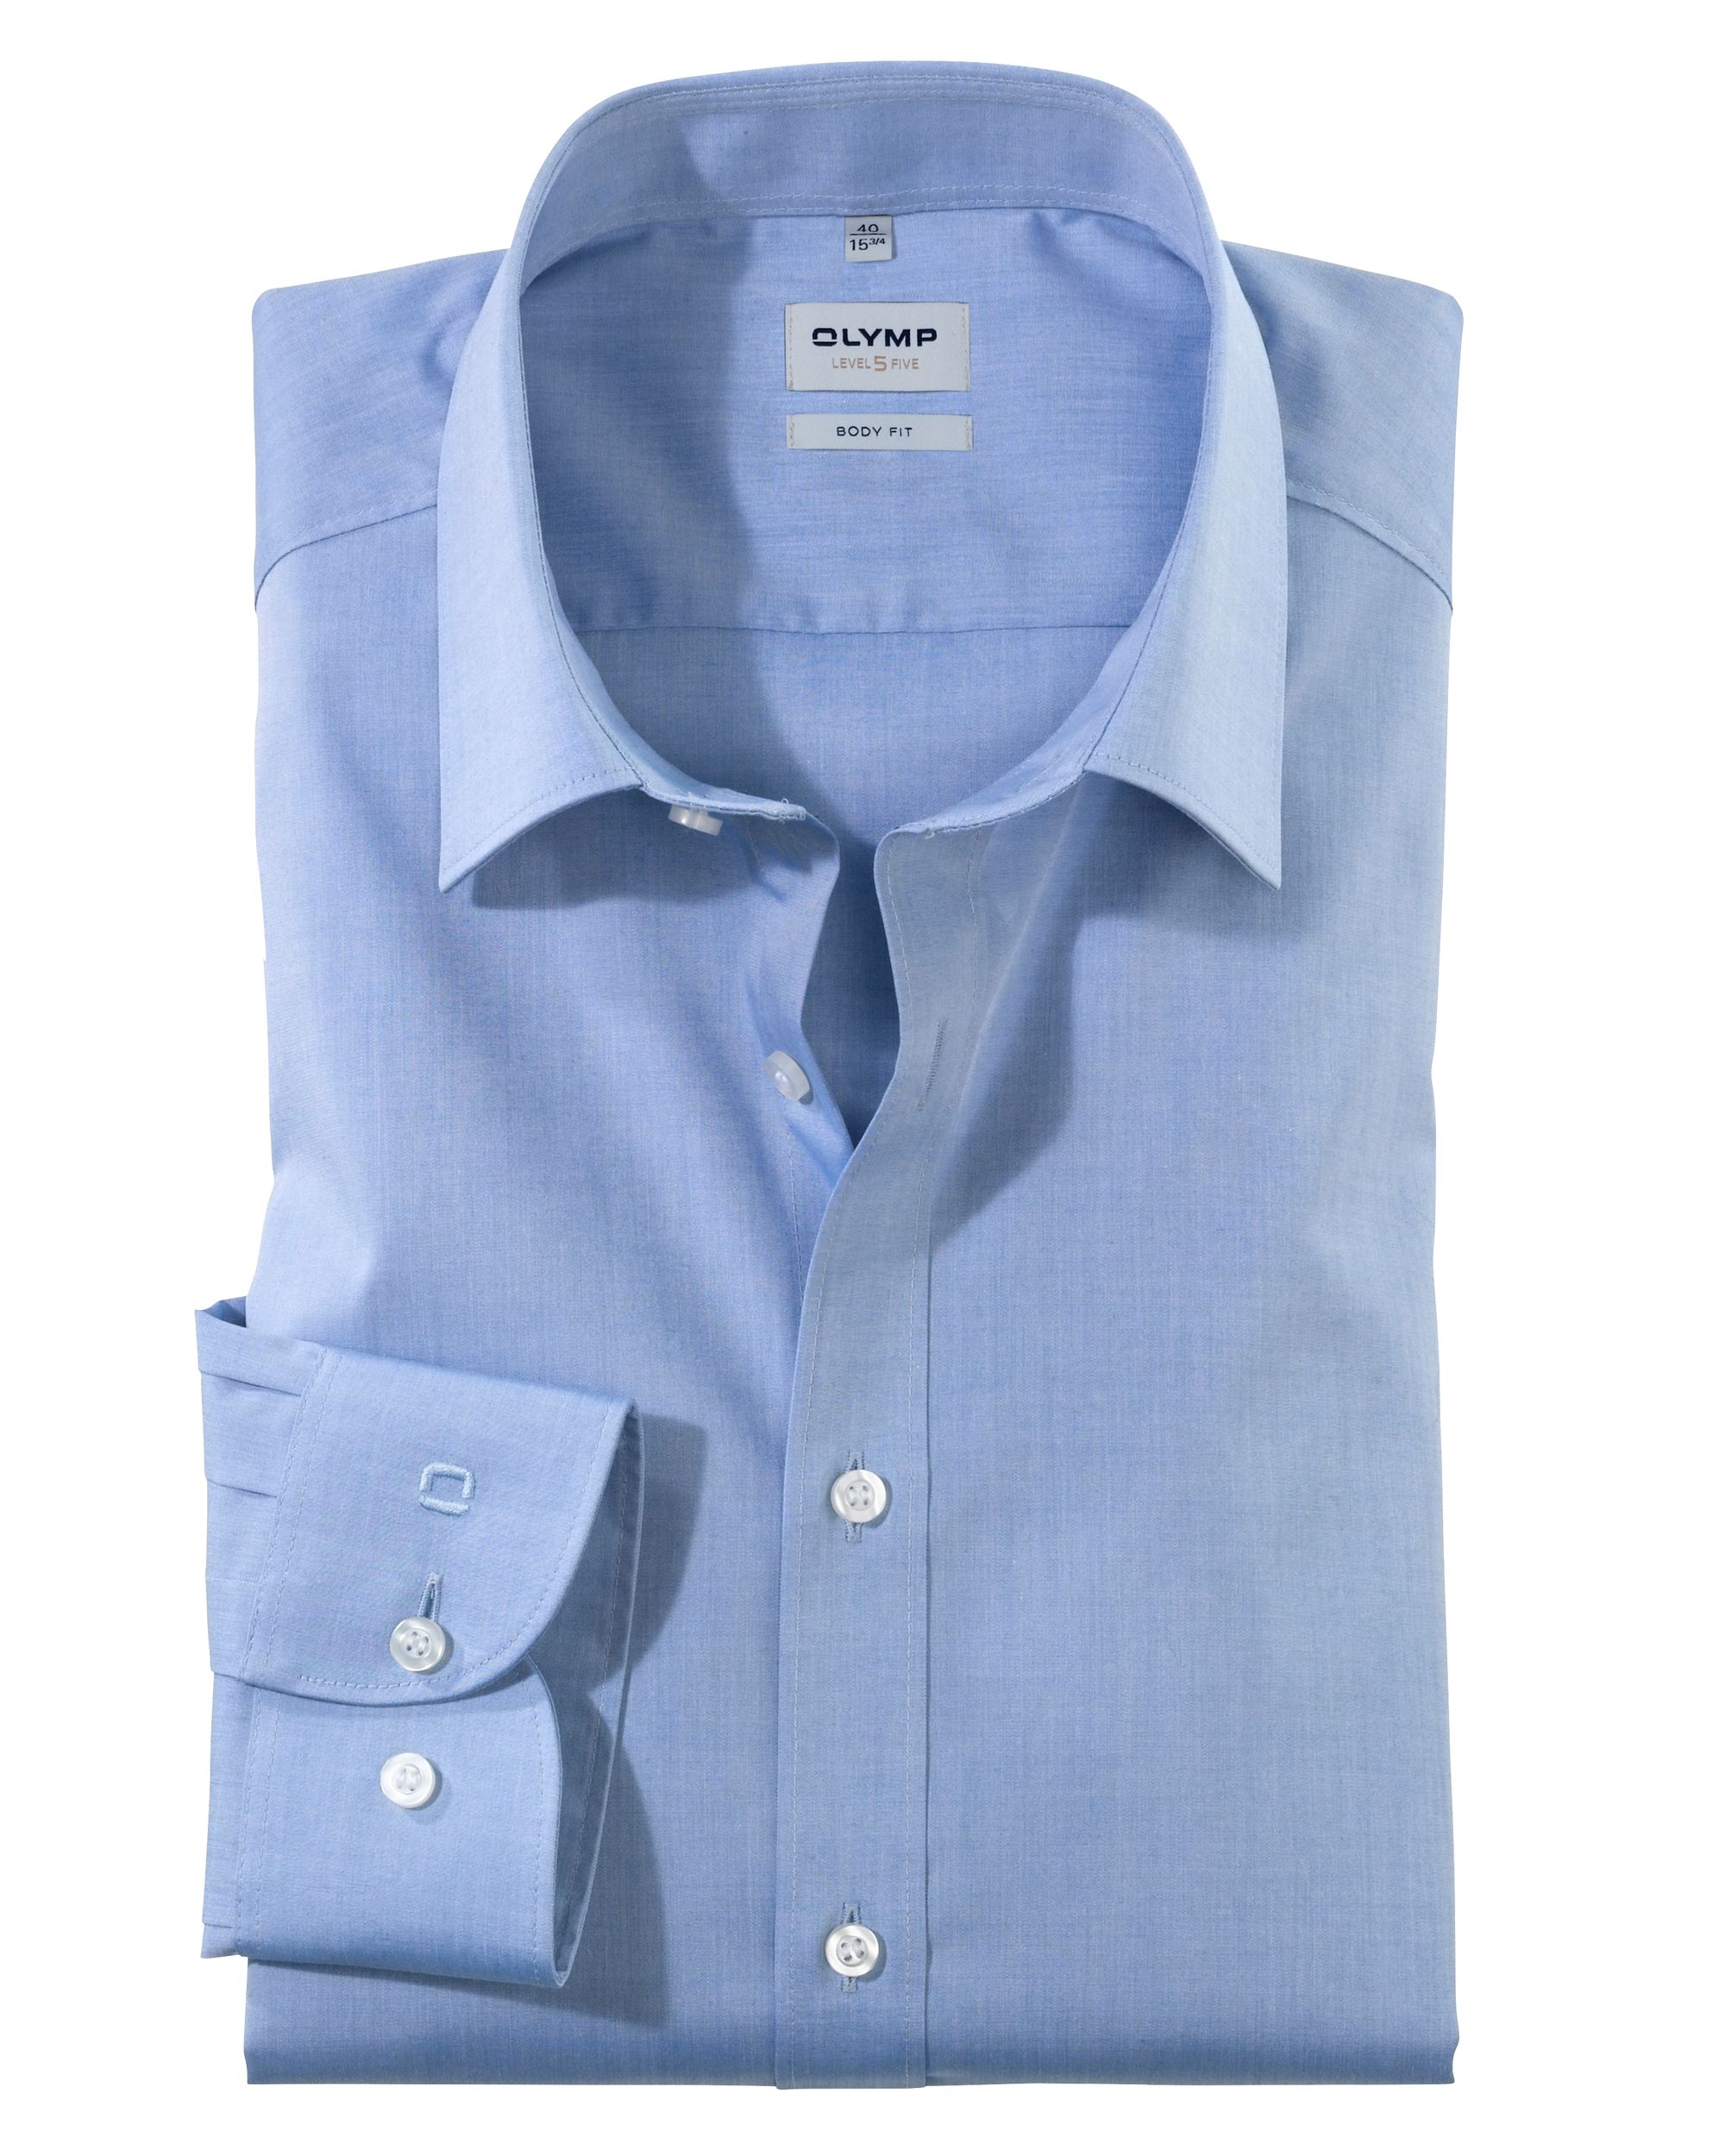 OLYMP Overhemd LM Blauw 011545-32-38